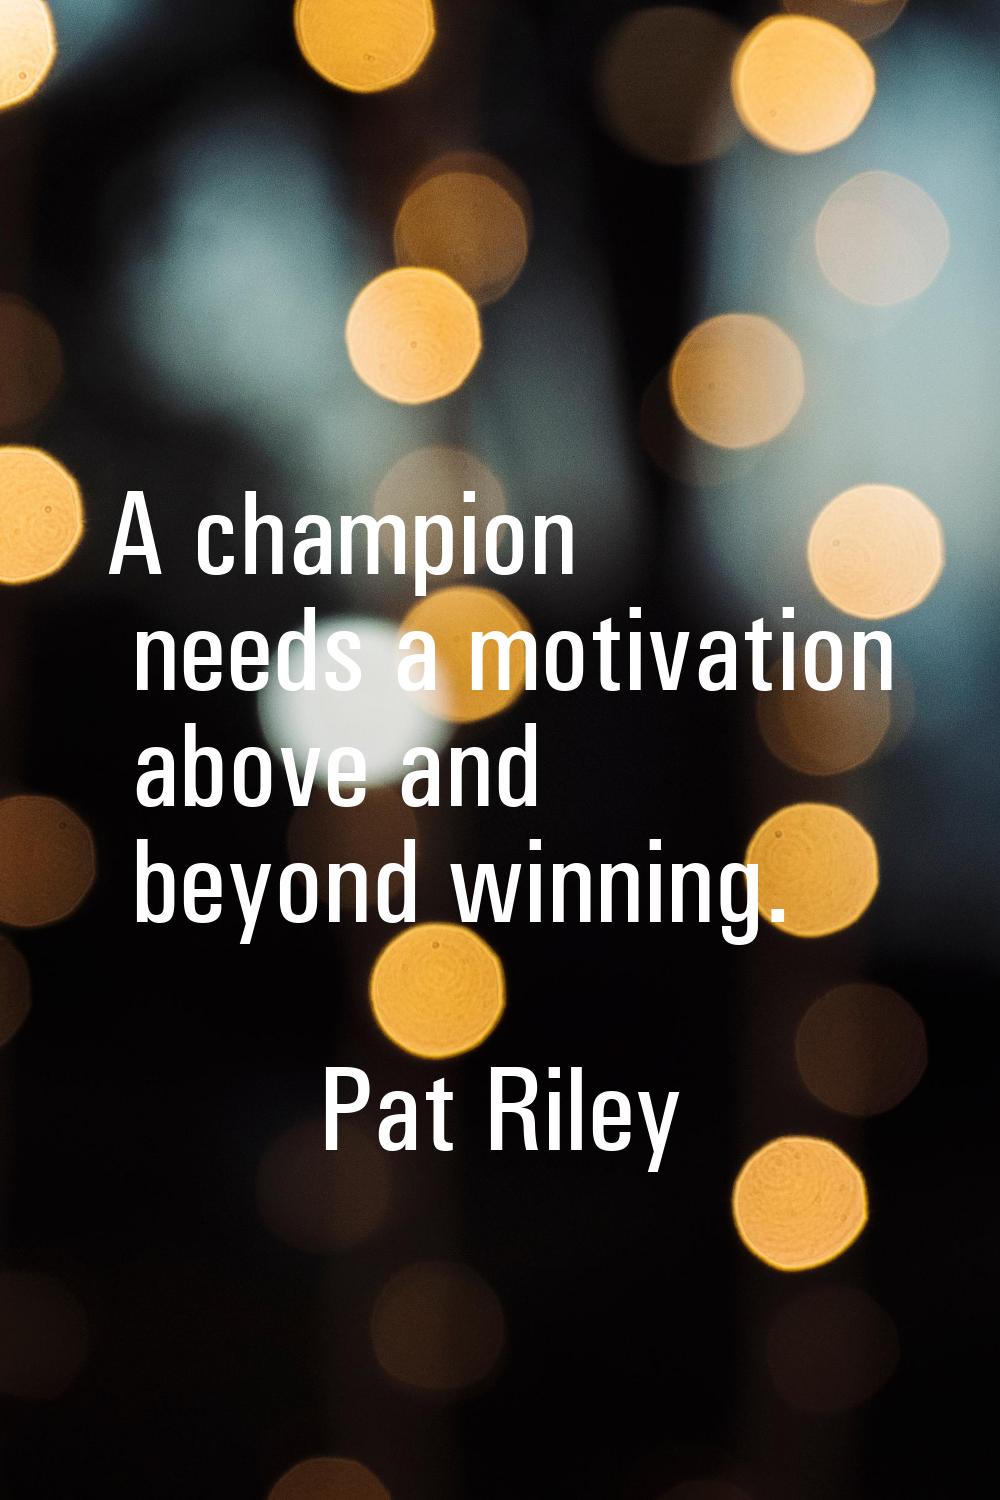 A champion needs a motivation above and beyond winning.